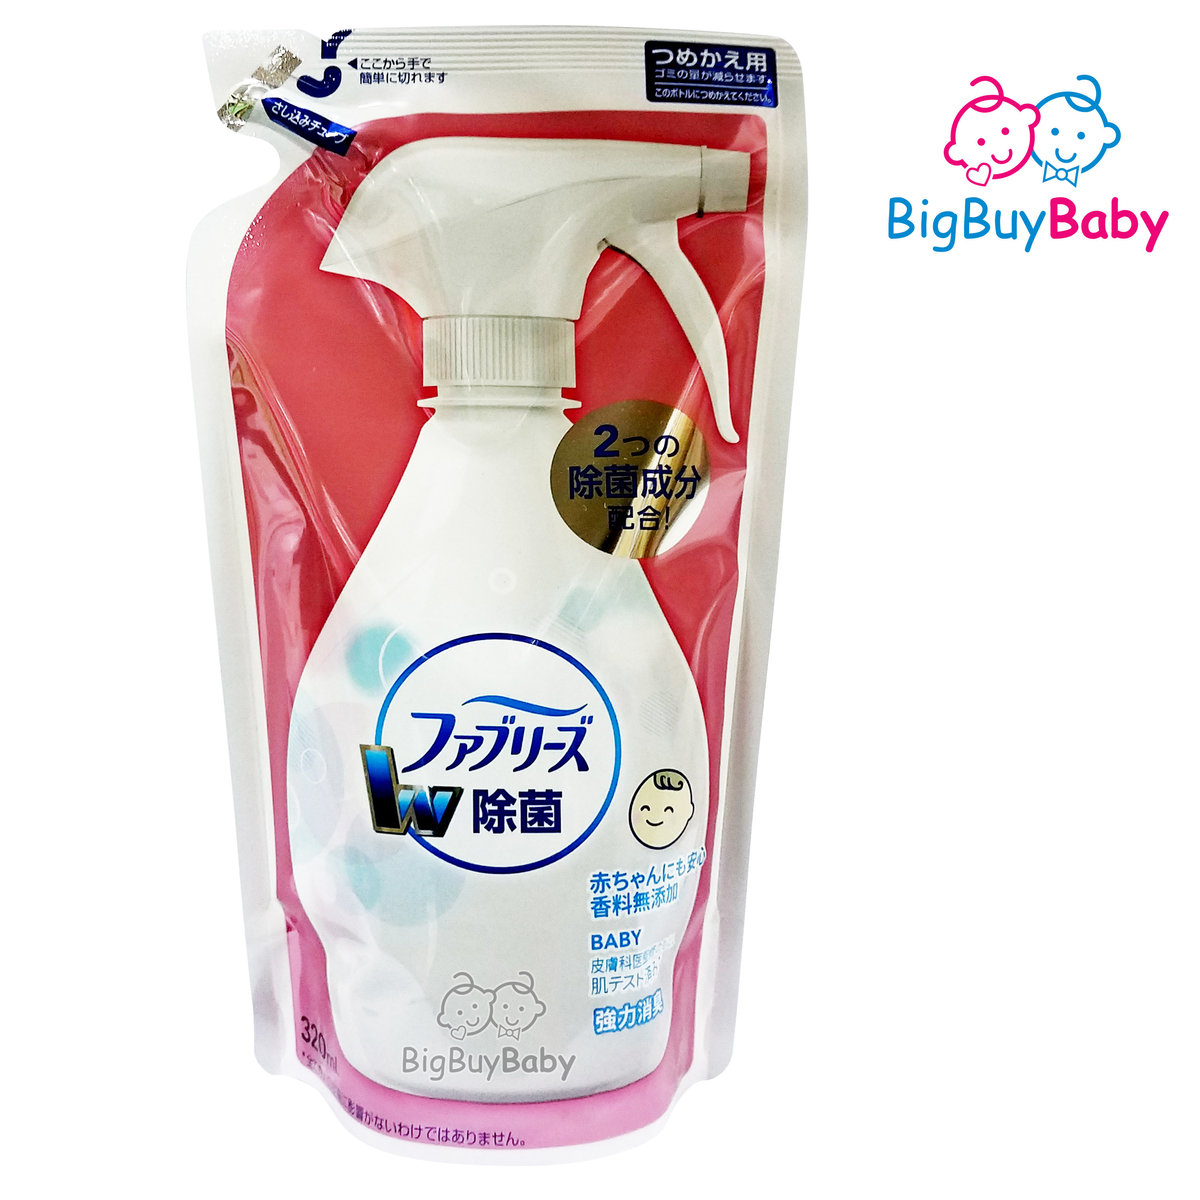 Febreze Fabric Refresher No Fragrance Baby Use 3ml Refill 5300 Hktvmall The Largest Hk Shopping Platform